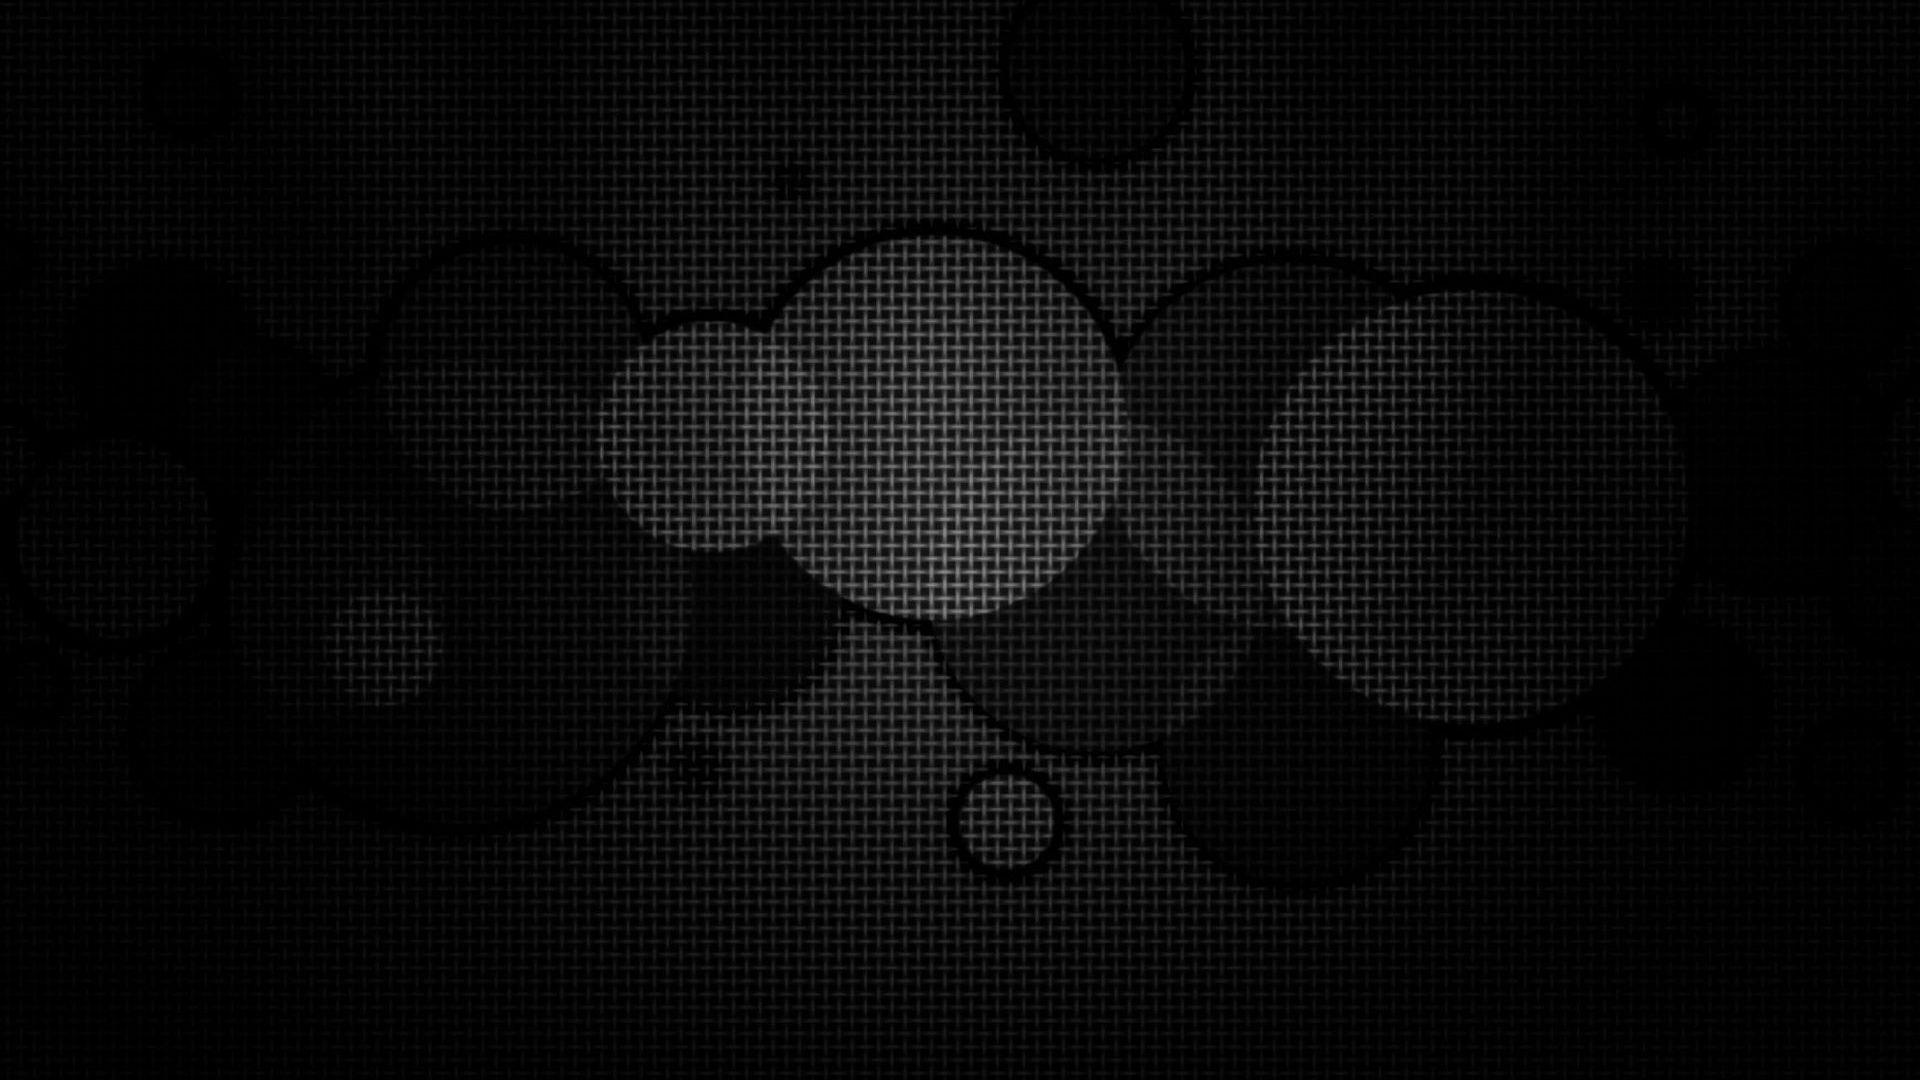 Black Abstract Hd Desktop Wallpapers Top Free Black Abstract Hd Desktop Backgrounds Wallpaperaccess